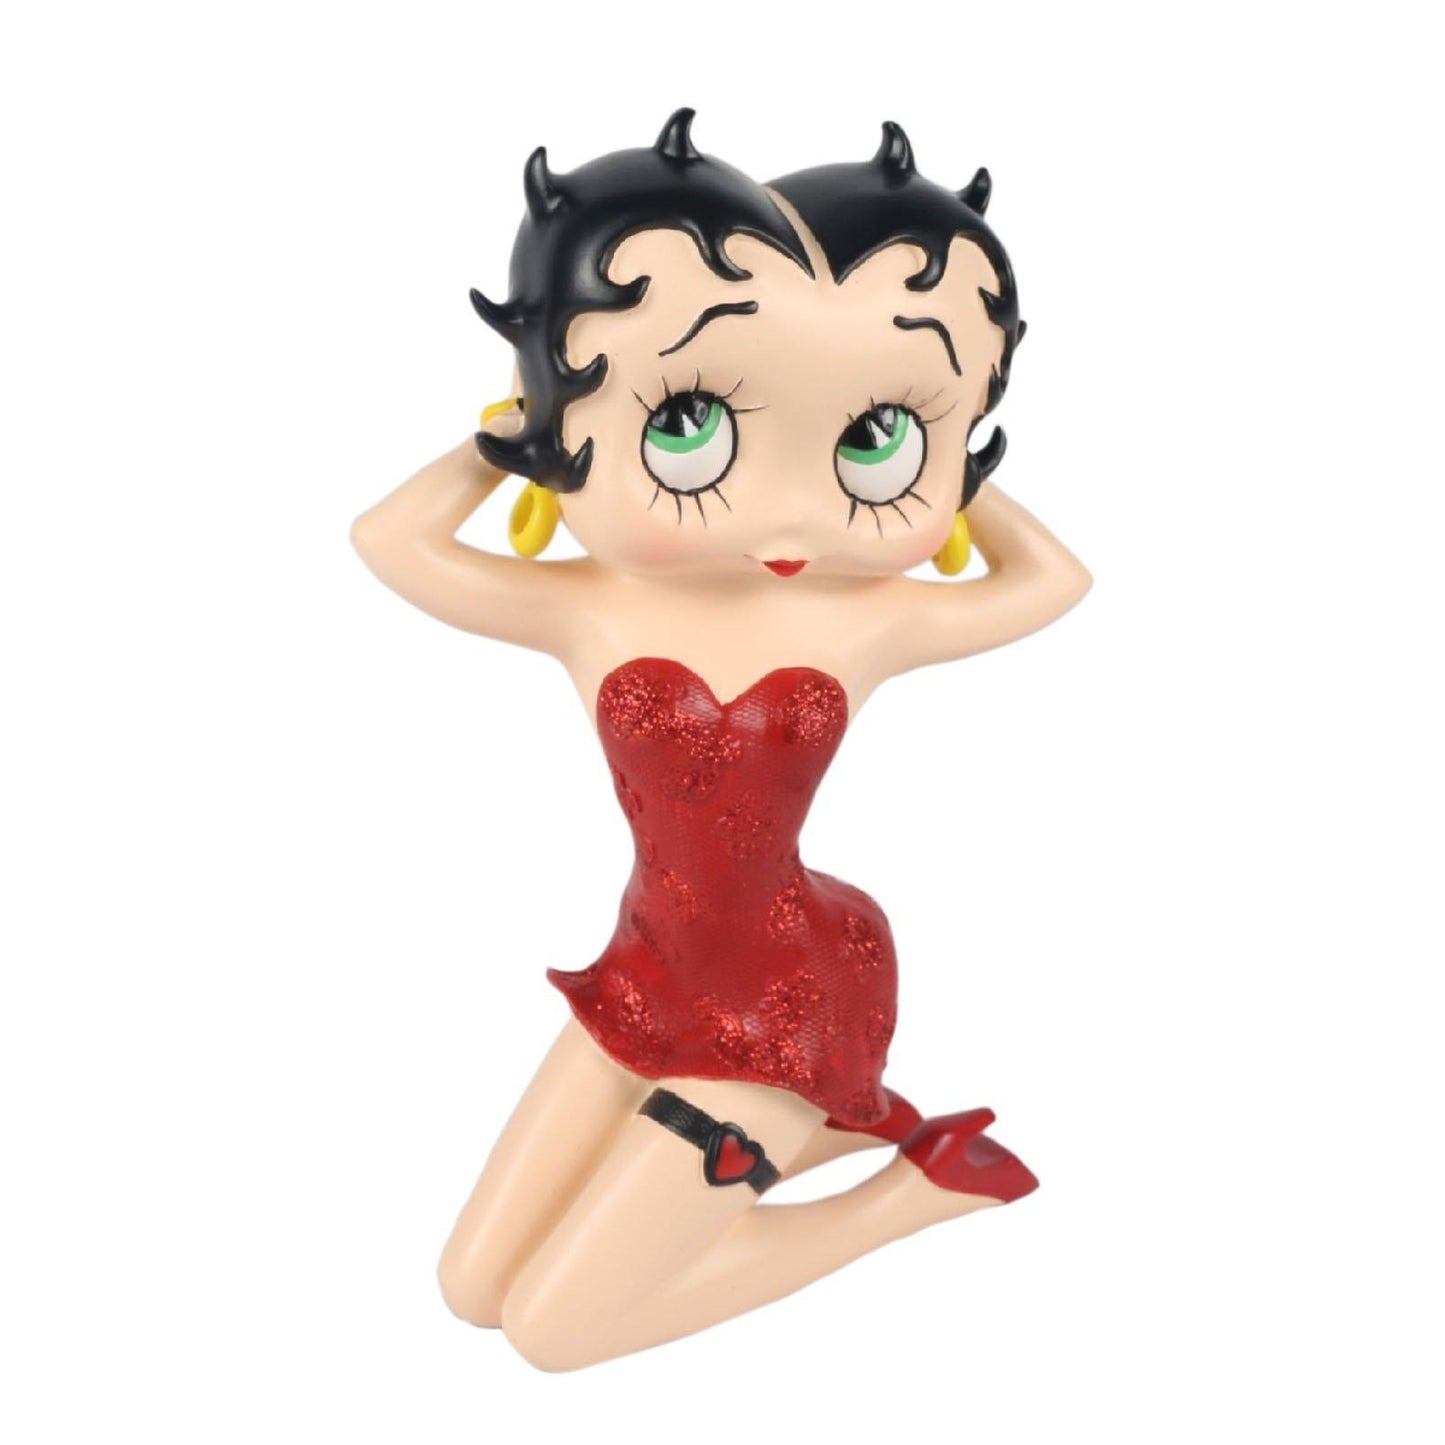 Betty Boop Kneeling Red Dress (Betty Boop) - Gallery Gifts Online 